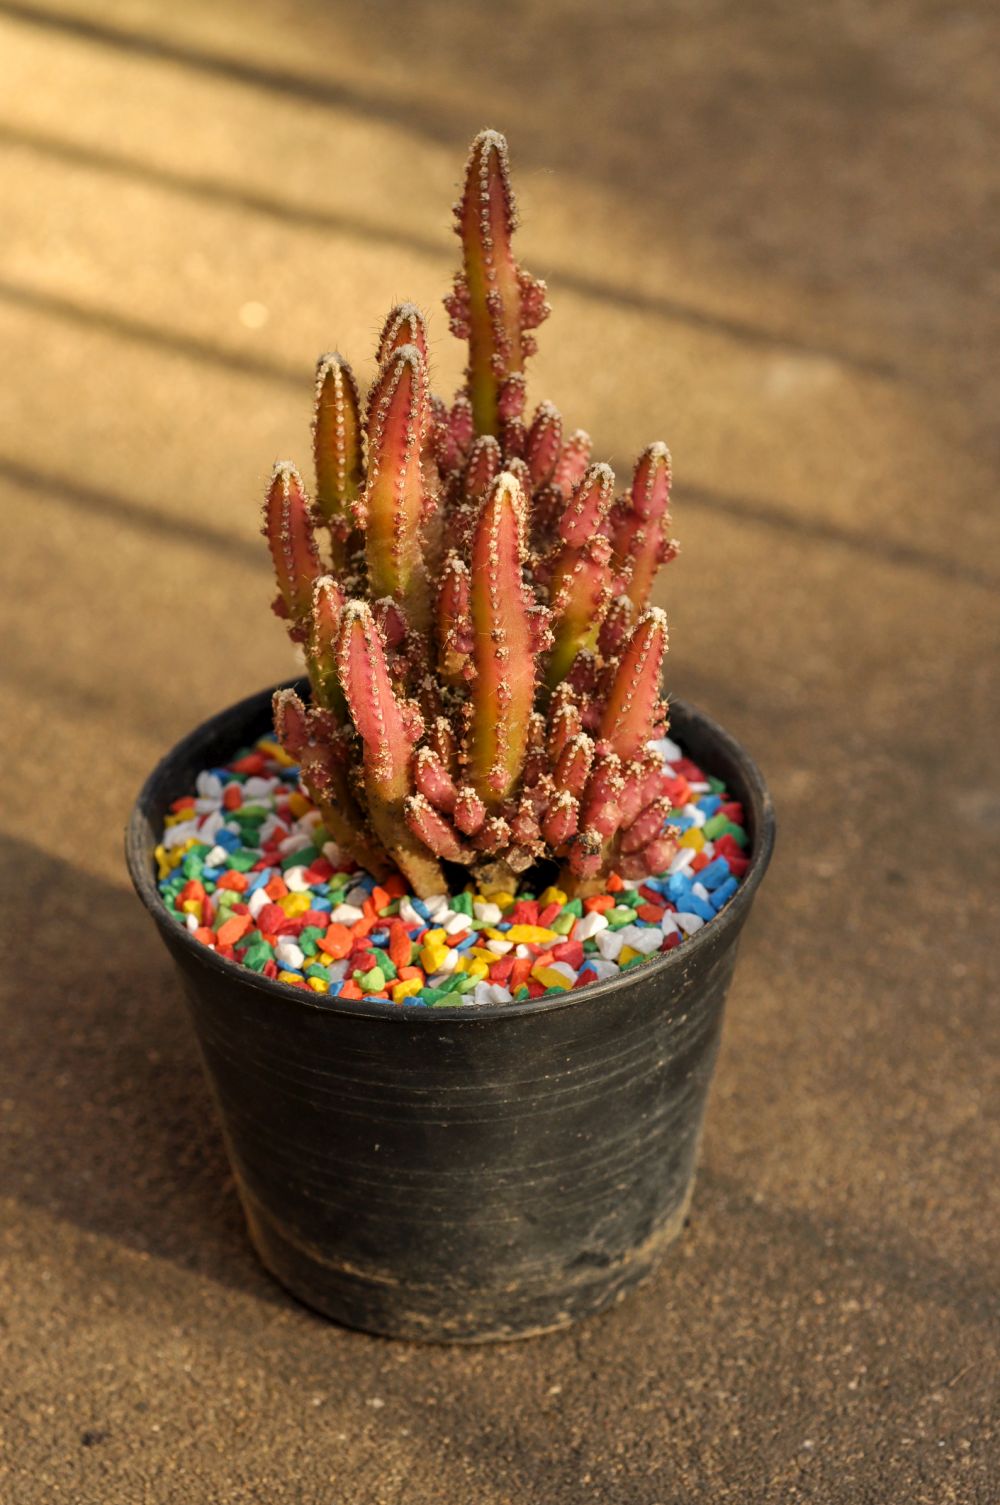 Fairy castle cactus in the pot